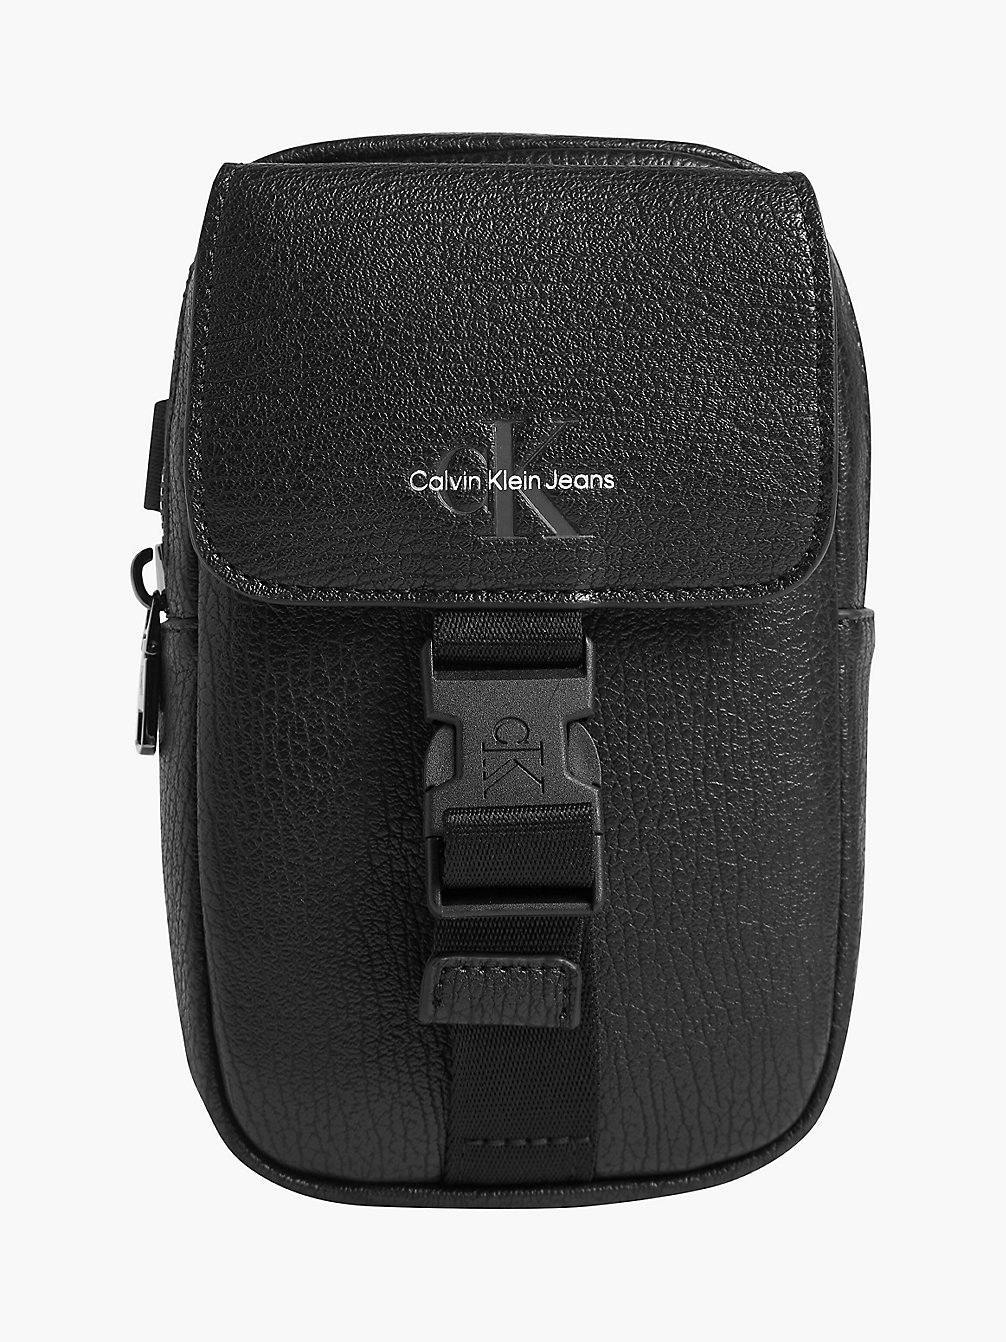 BLACK Small Crossbody Bag undefined men Calvin Klein